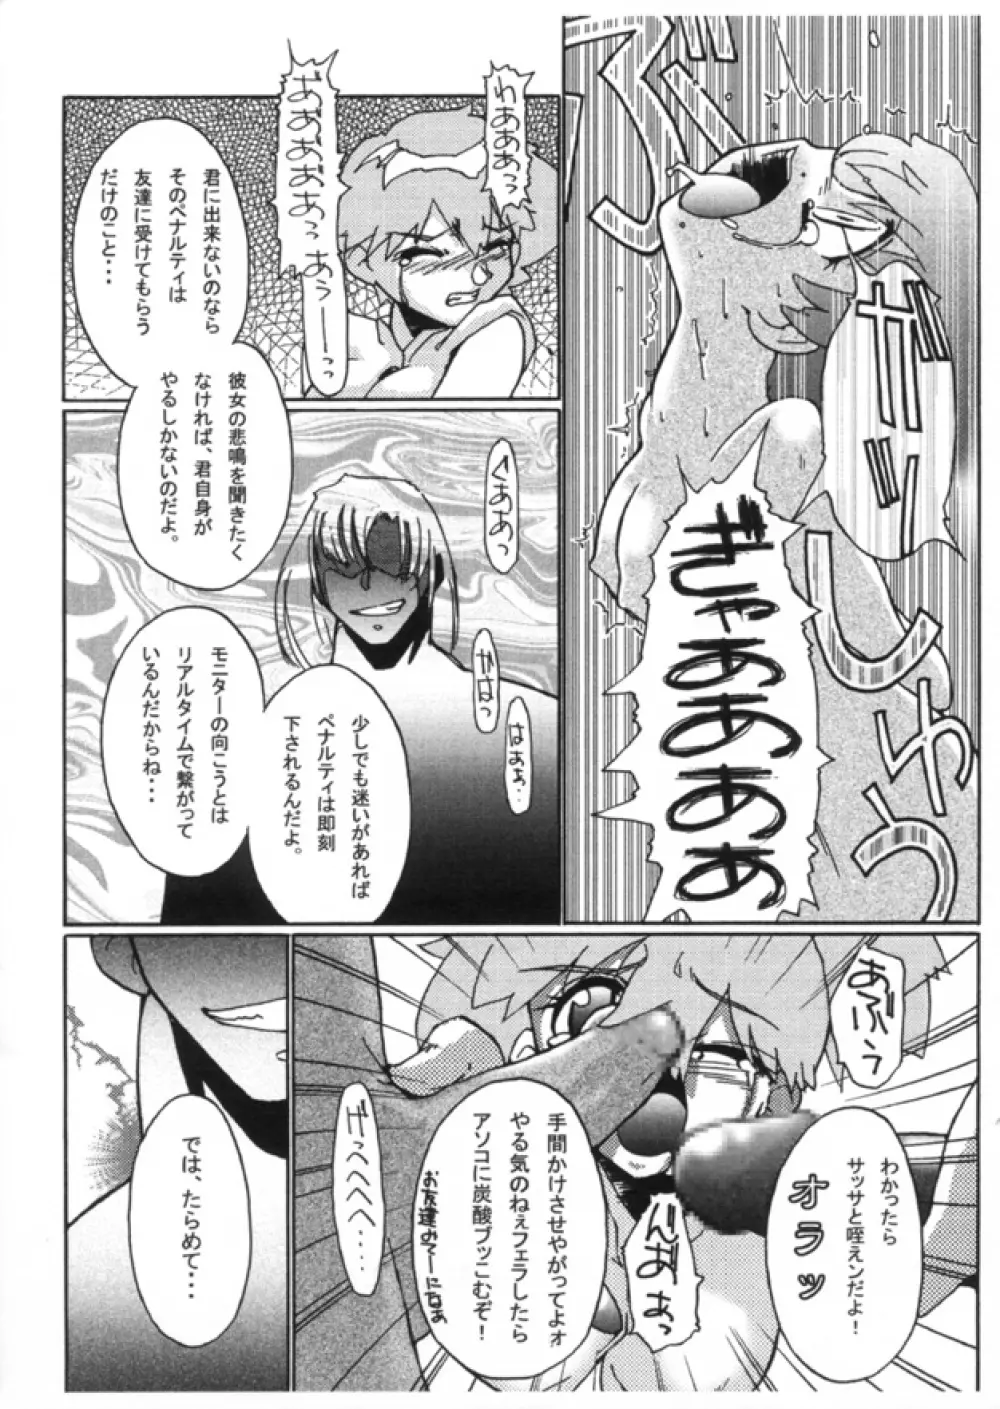 KASUMIX XPLOSION Kasumi Comic part5 - page43